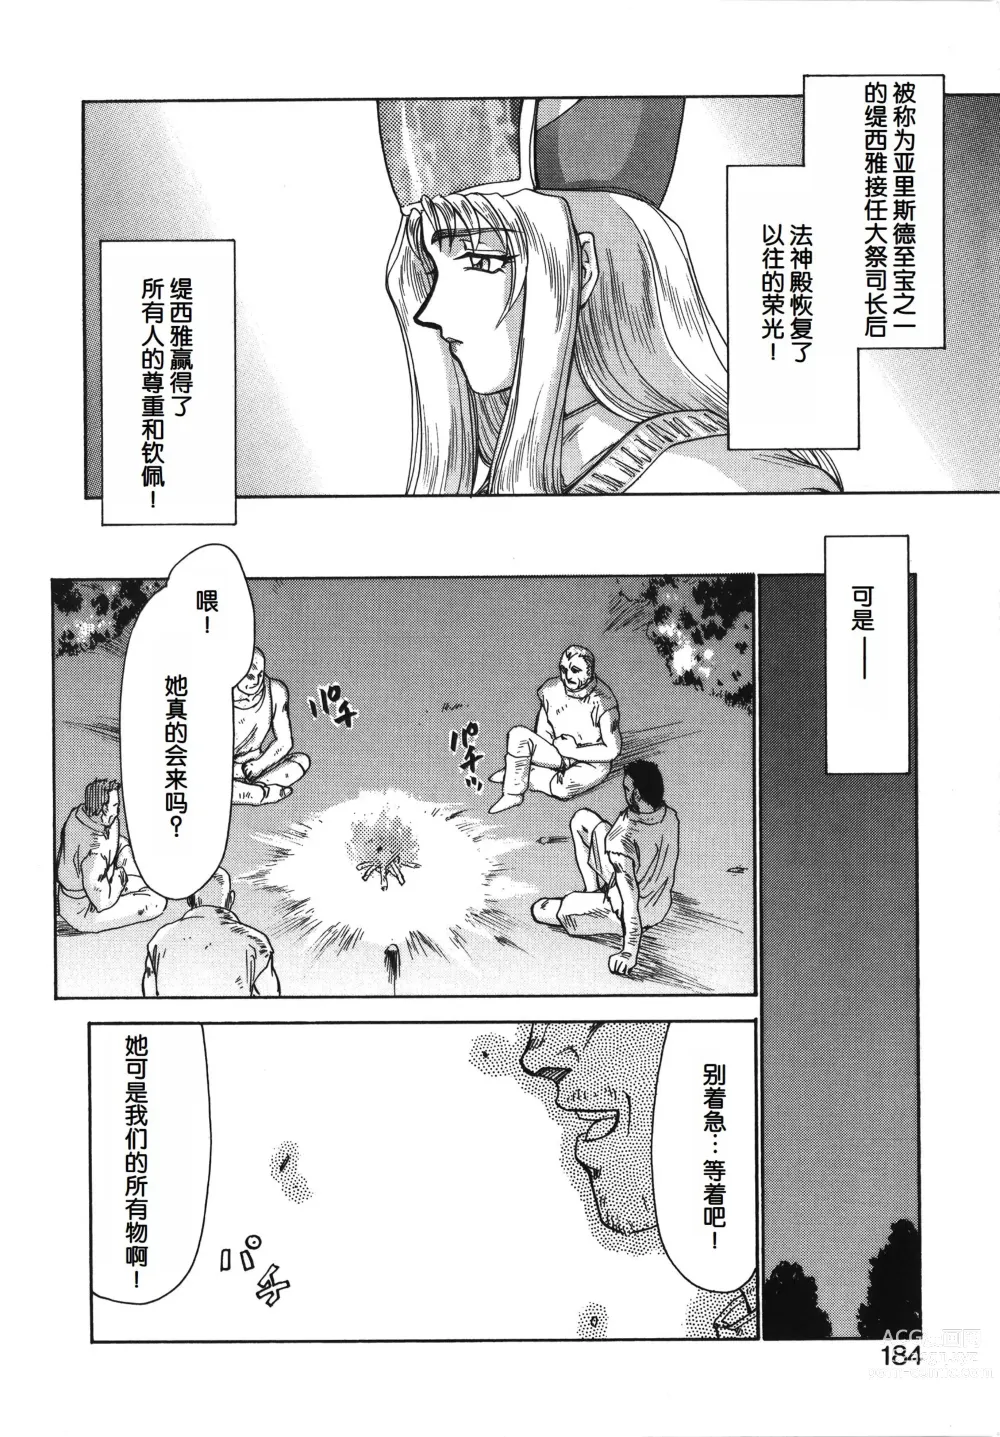 Page 184 of manga Bad Moon...